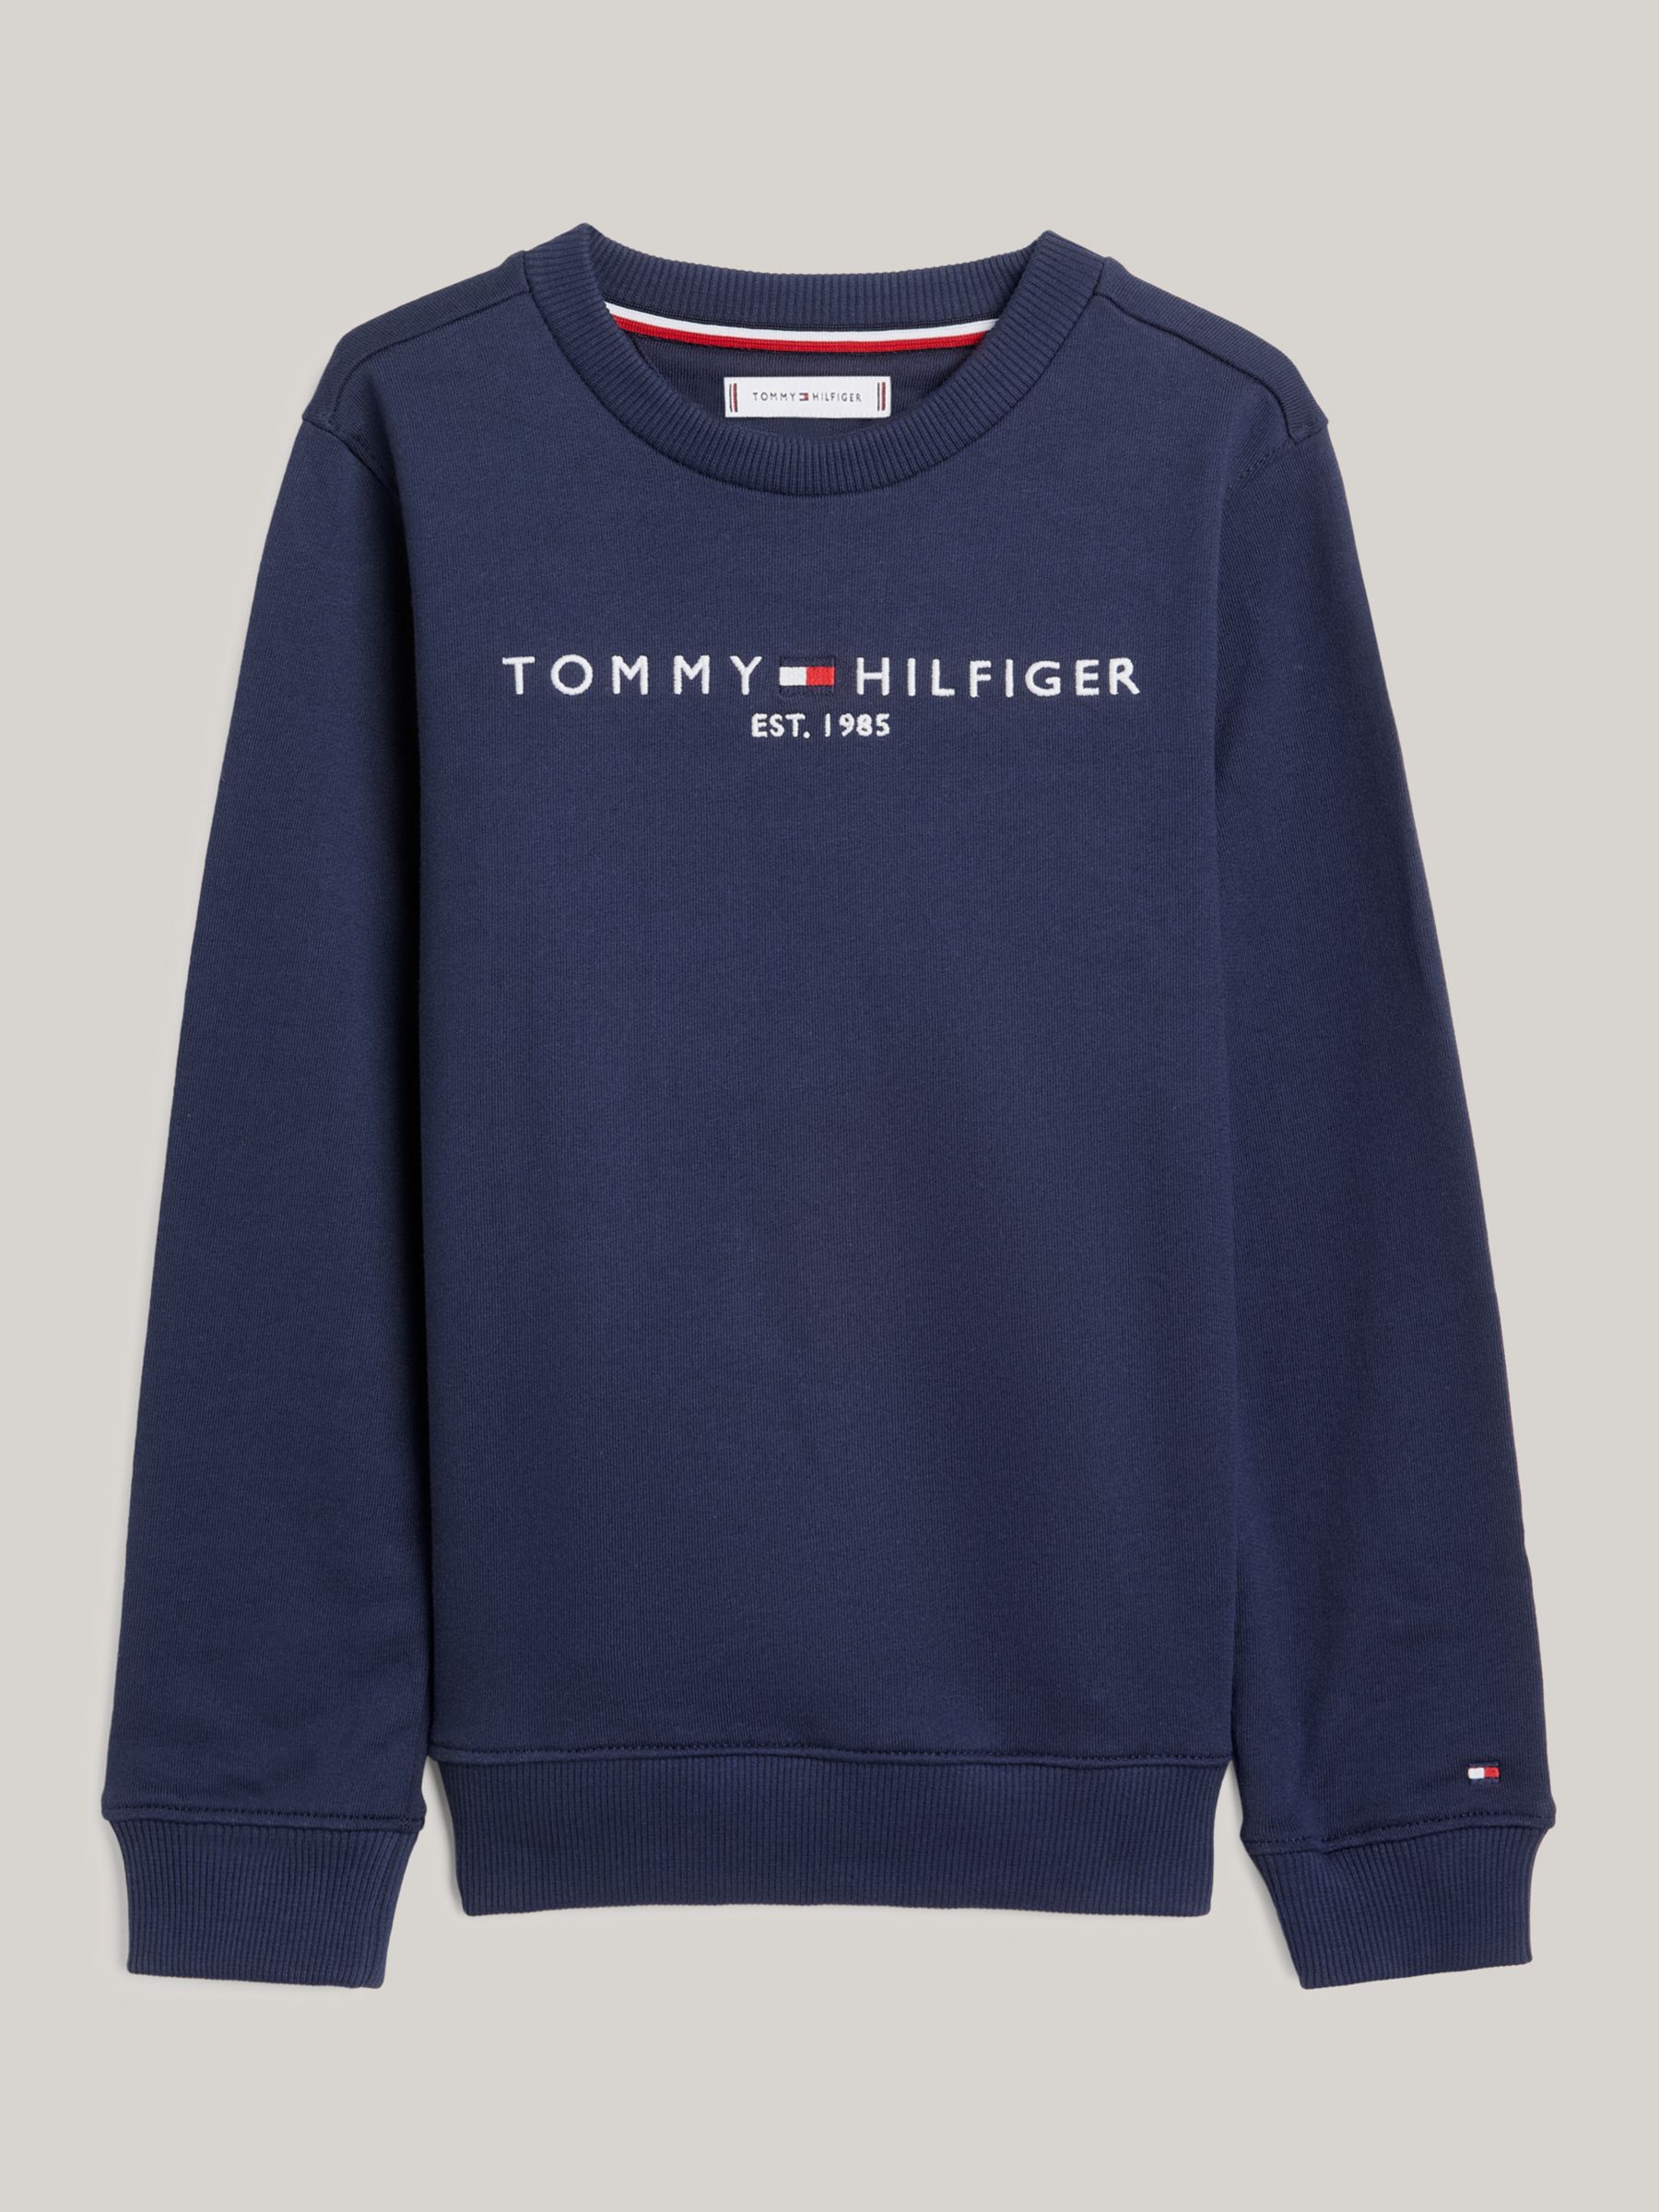 Essential at John & Kids\' Organic Lewis Tommy Partners Navy Logo Sweatshirt, Hilfiger Twilight Cotton